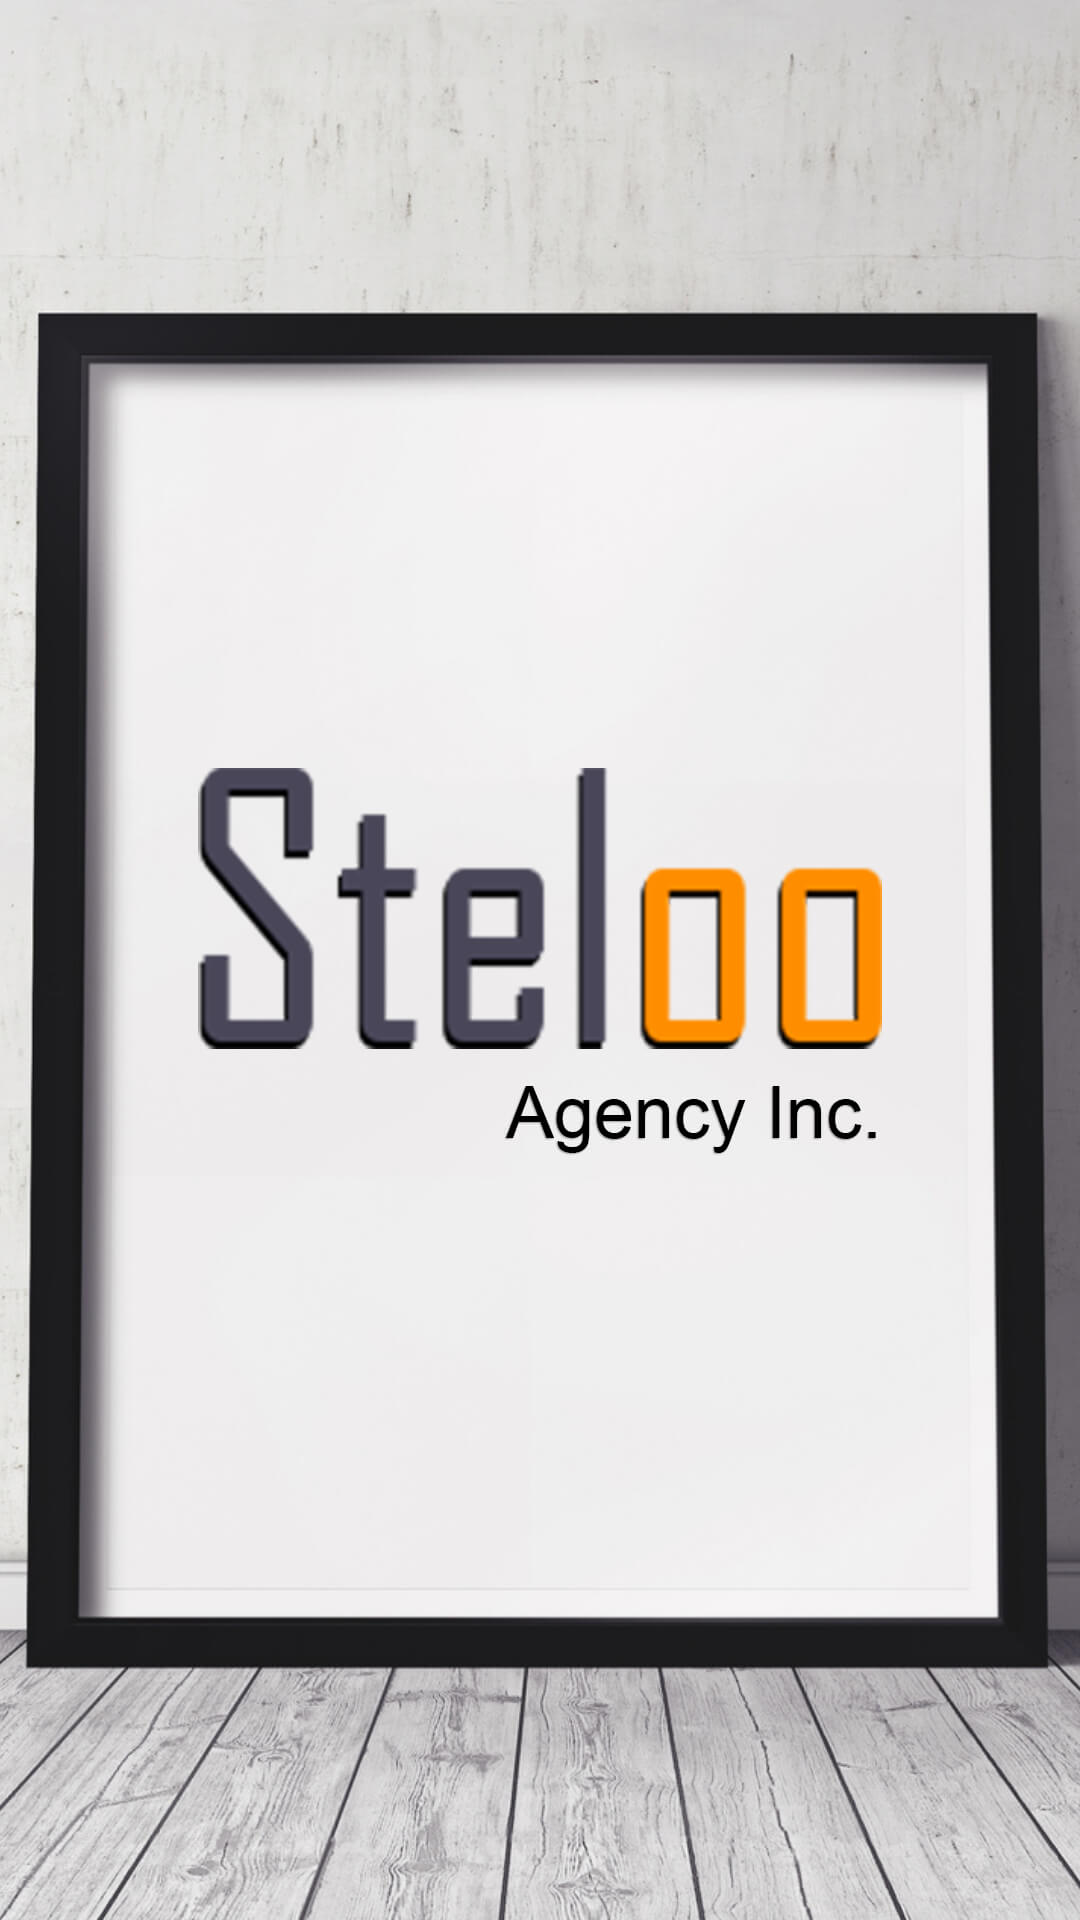 A Steloo agency inc. wall sign